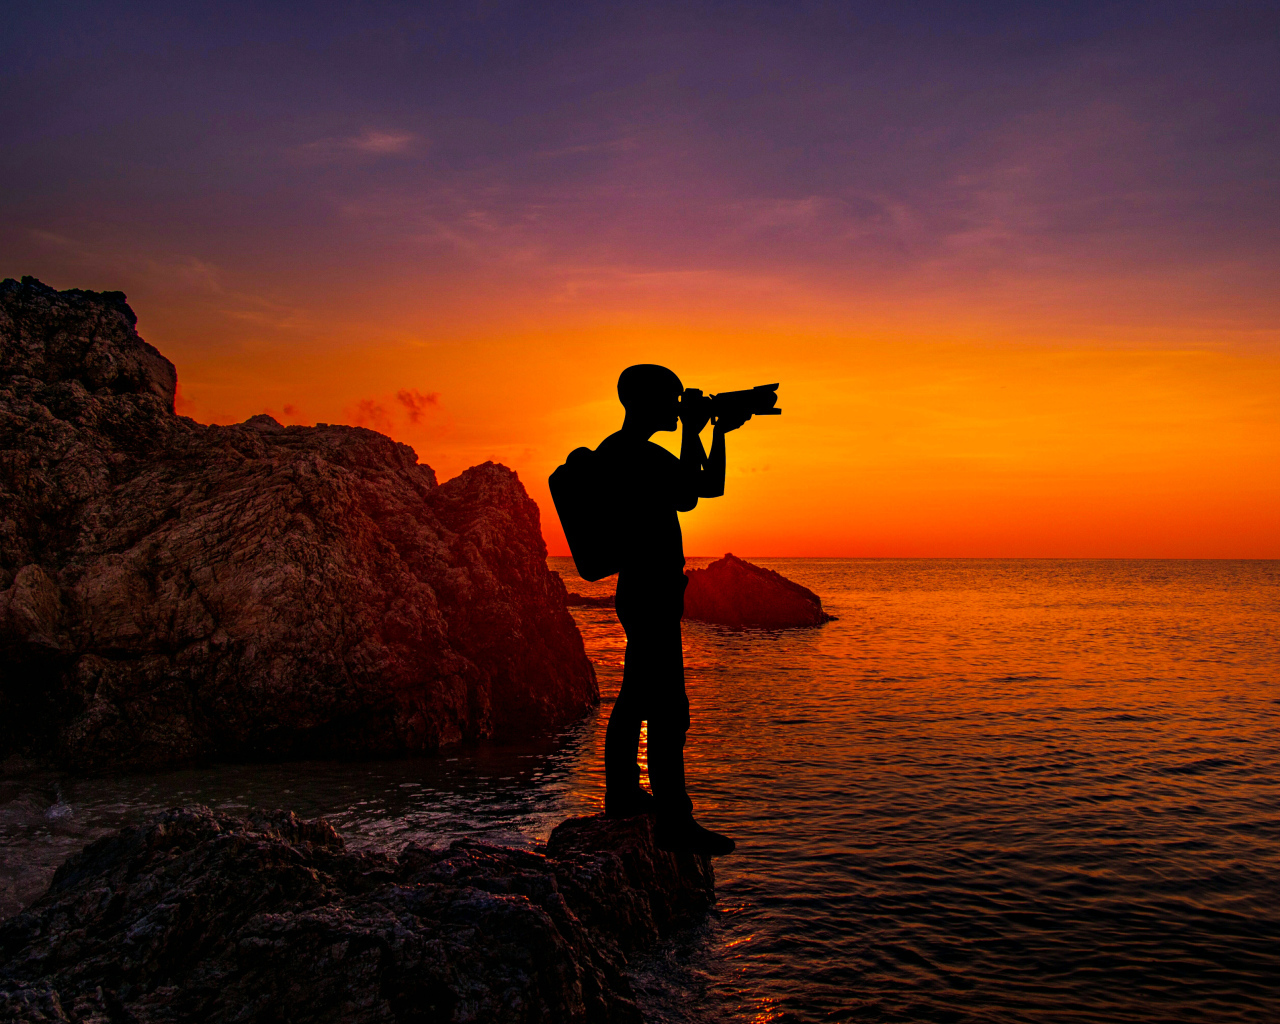 Мужчина фотографирует закат на берегу моря